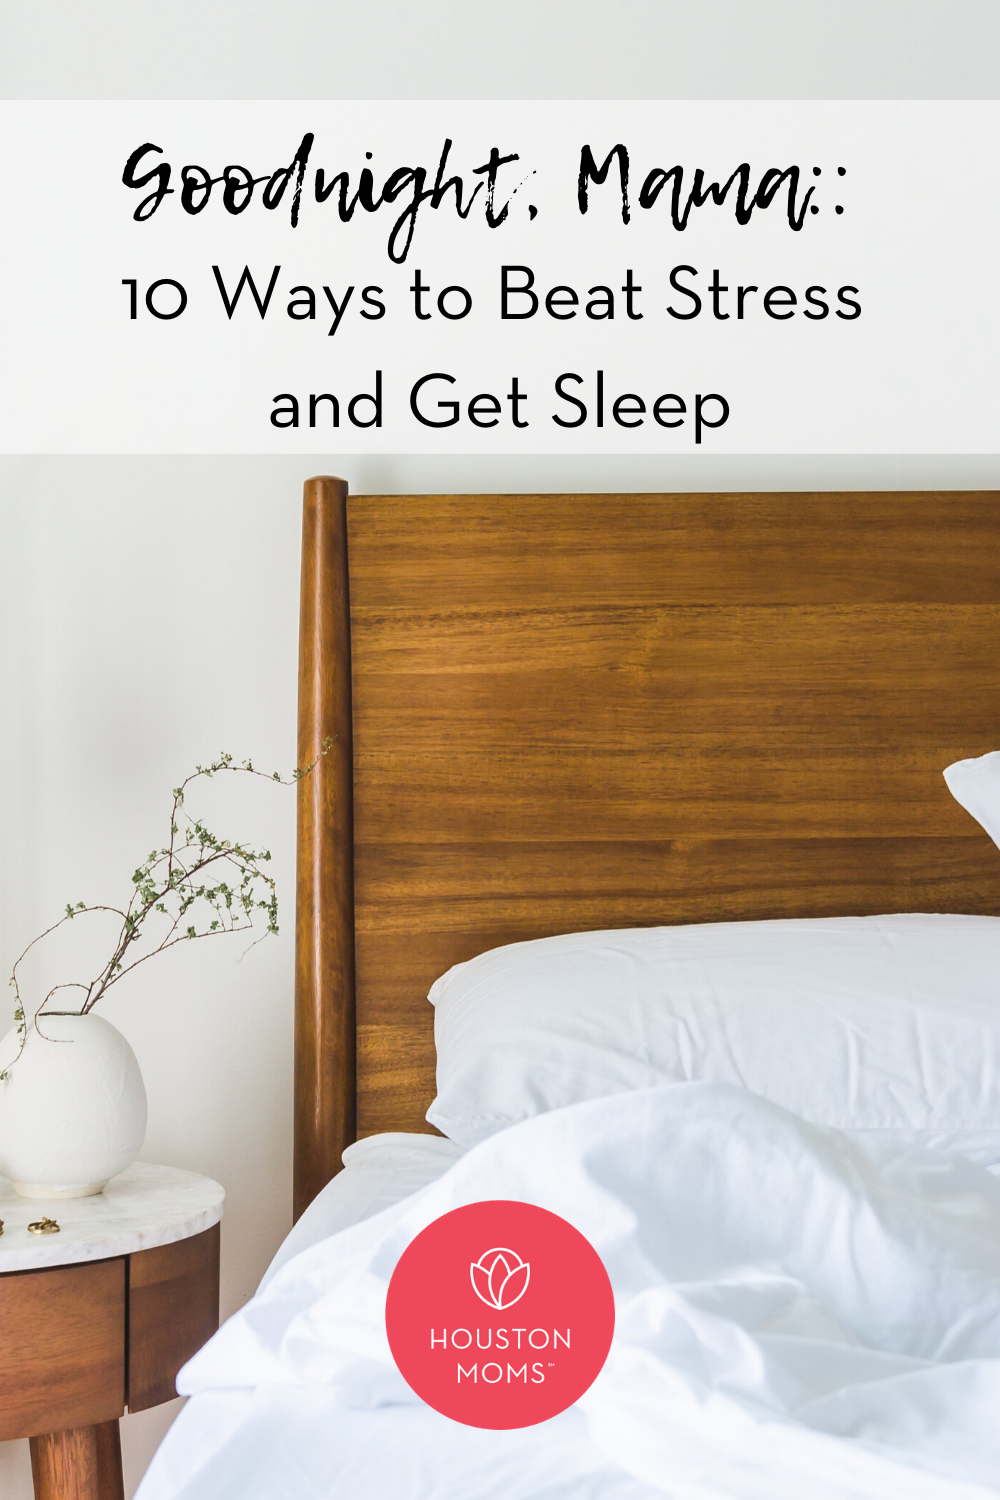 Houston Moms "Goodnight Mama:: 10 Ways to Beat Stress and Get Sleep" #houstonmoms #houstonmomsblog #momsaroundhouston